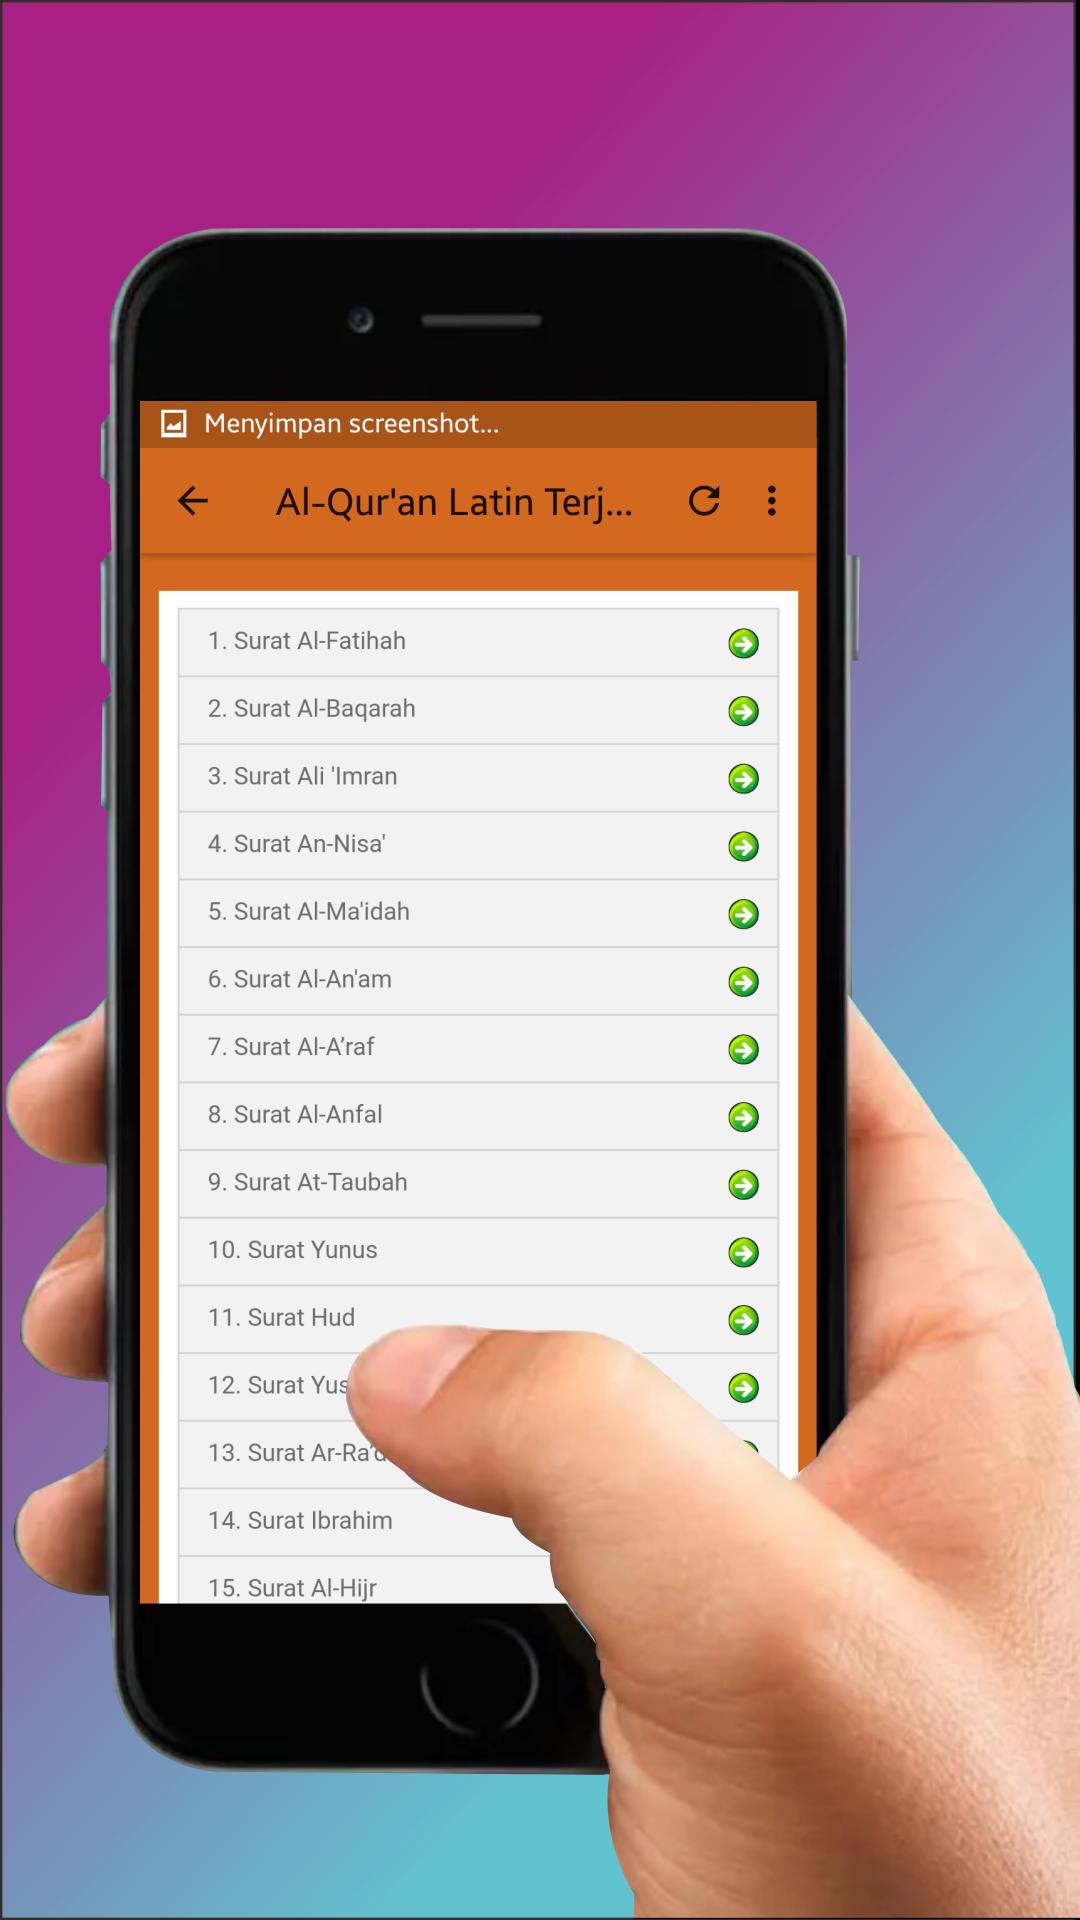 Al Quran Latin Terjemah Dan Tajwid 30 Juz Lengkap For